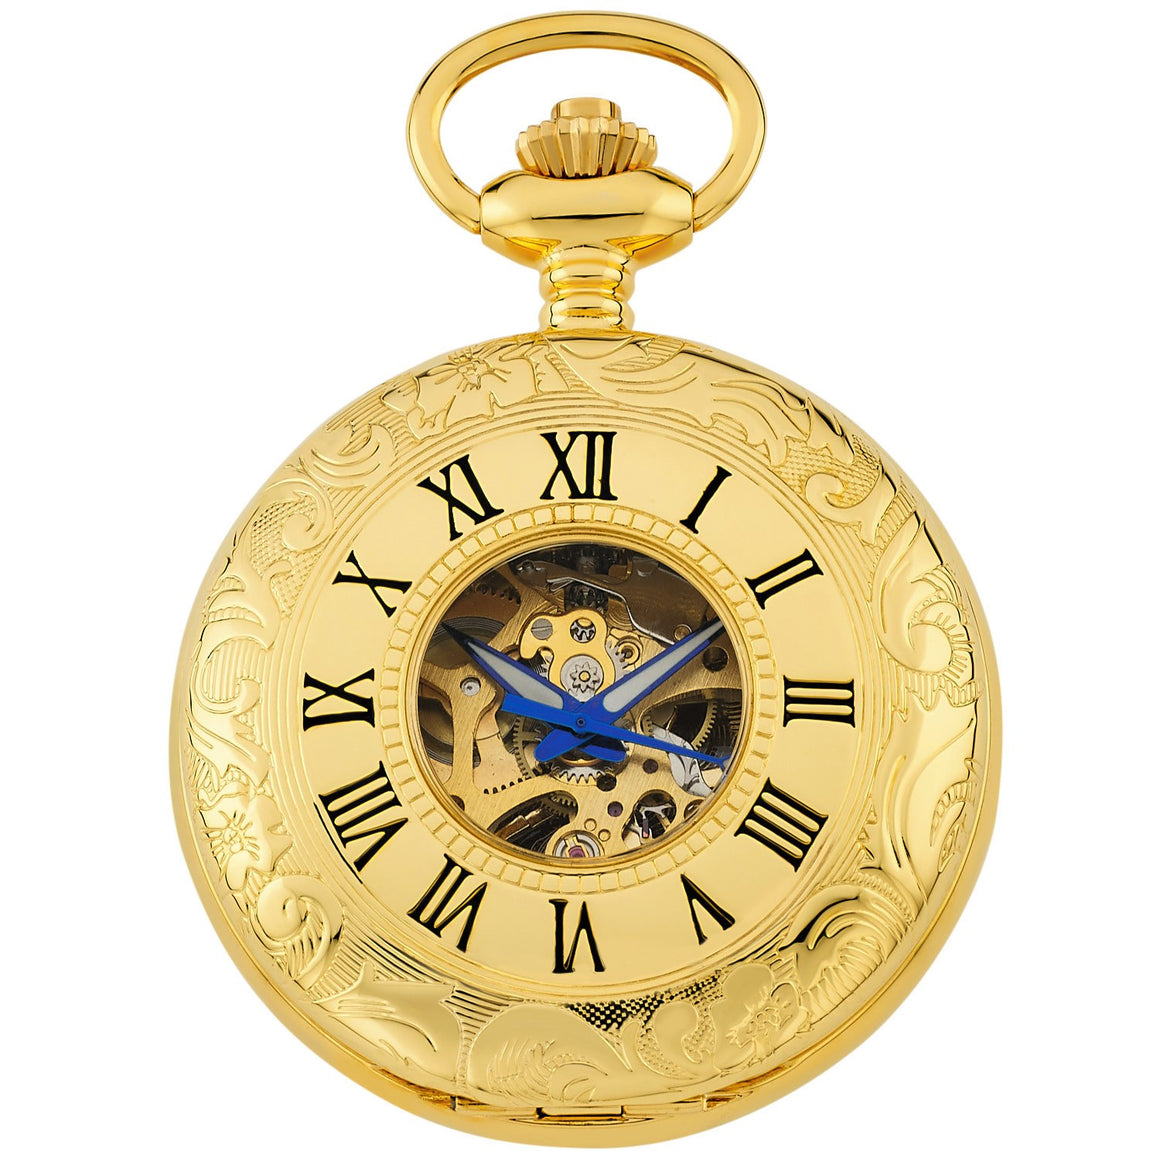 Gotham Men's Gold-Tone 17 Jewel Mechanical Exhibition Pocket Watch # GWC14040G